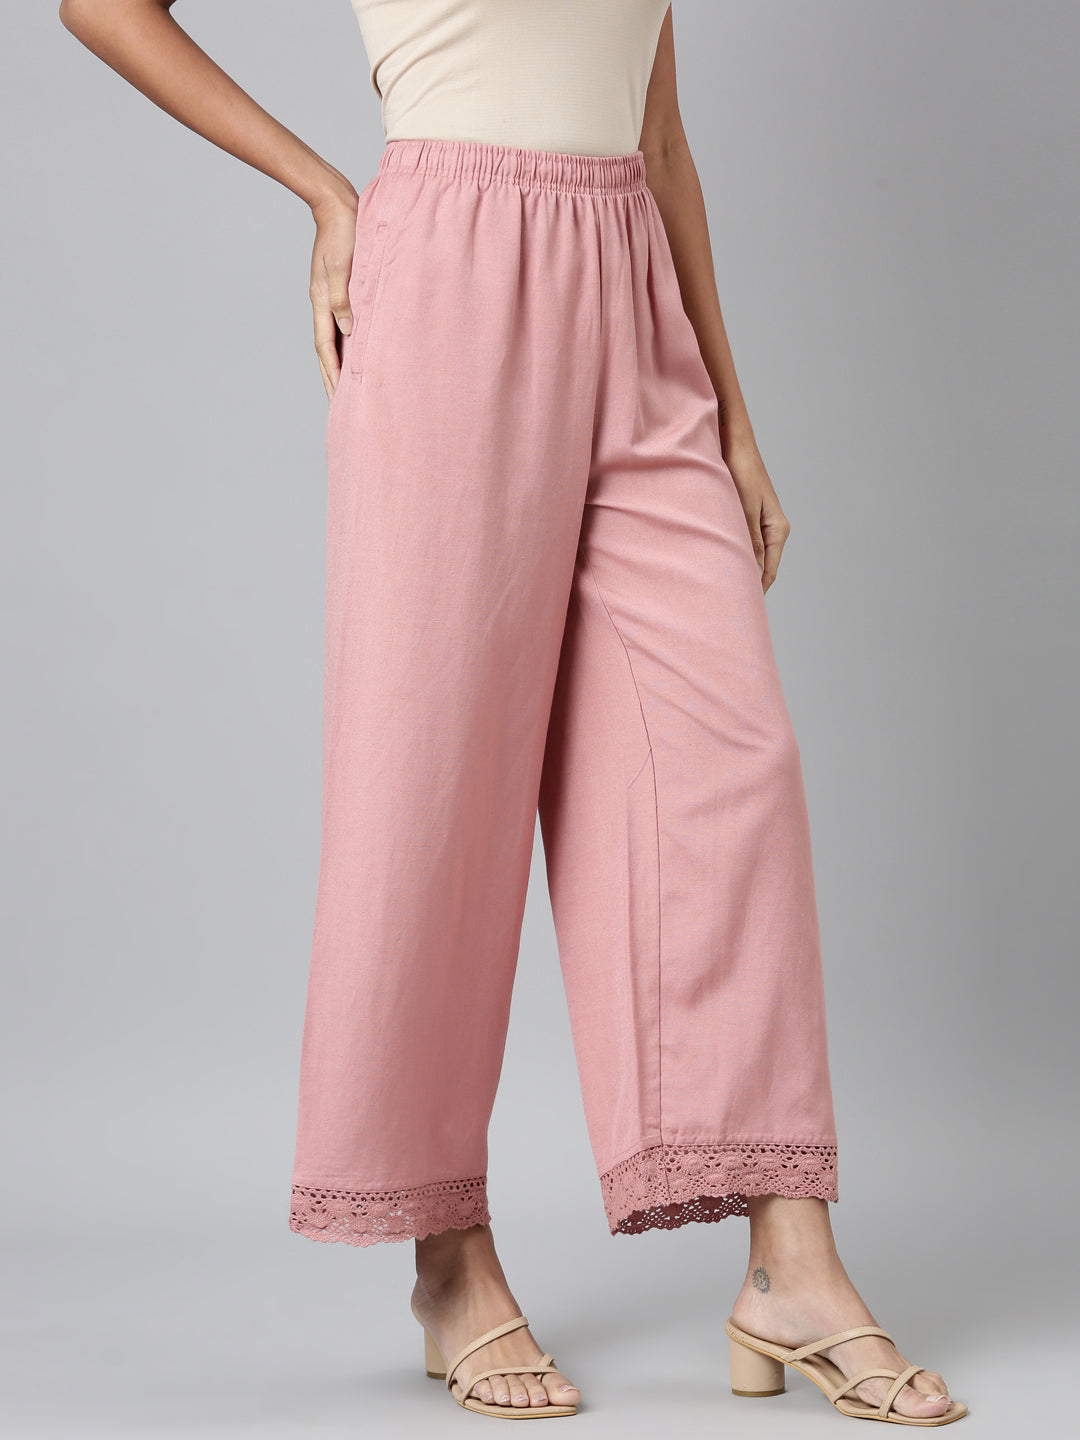 Pink Trouser Pants - Wide-Leg Trouser Pants - Light Pink Pants - Lulus